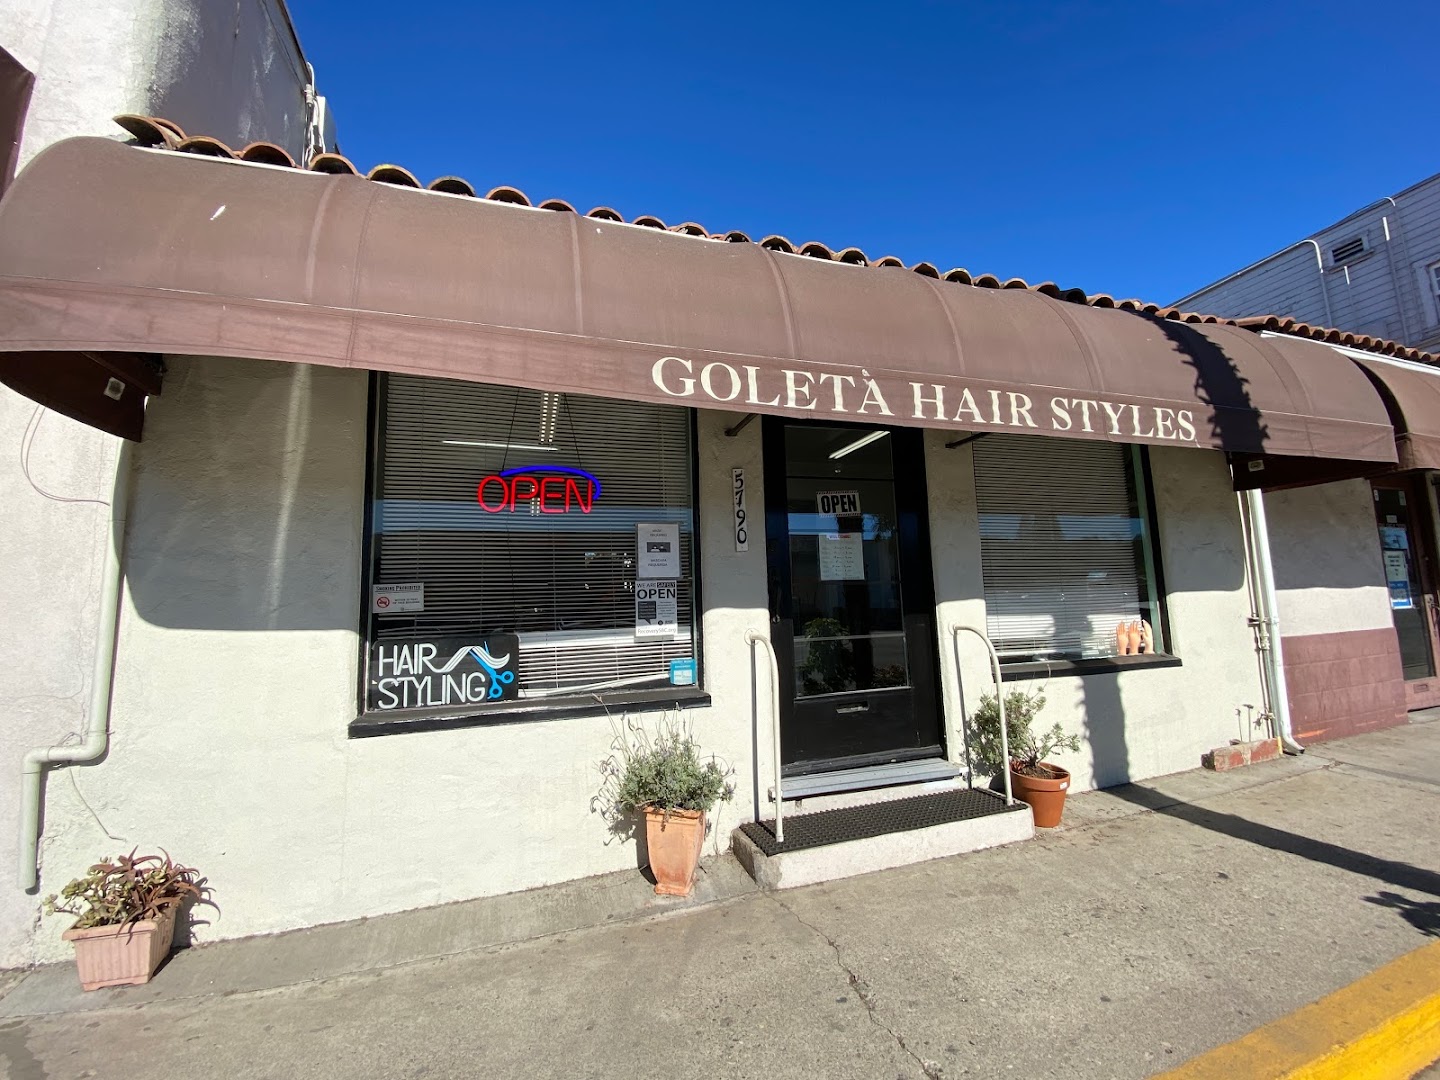 Goleta Hair Styles